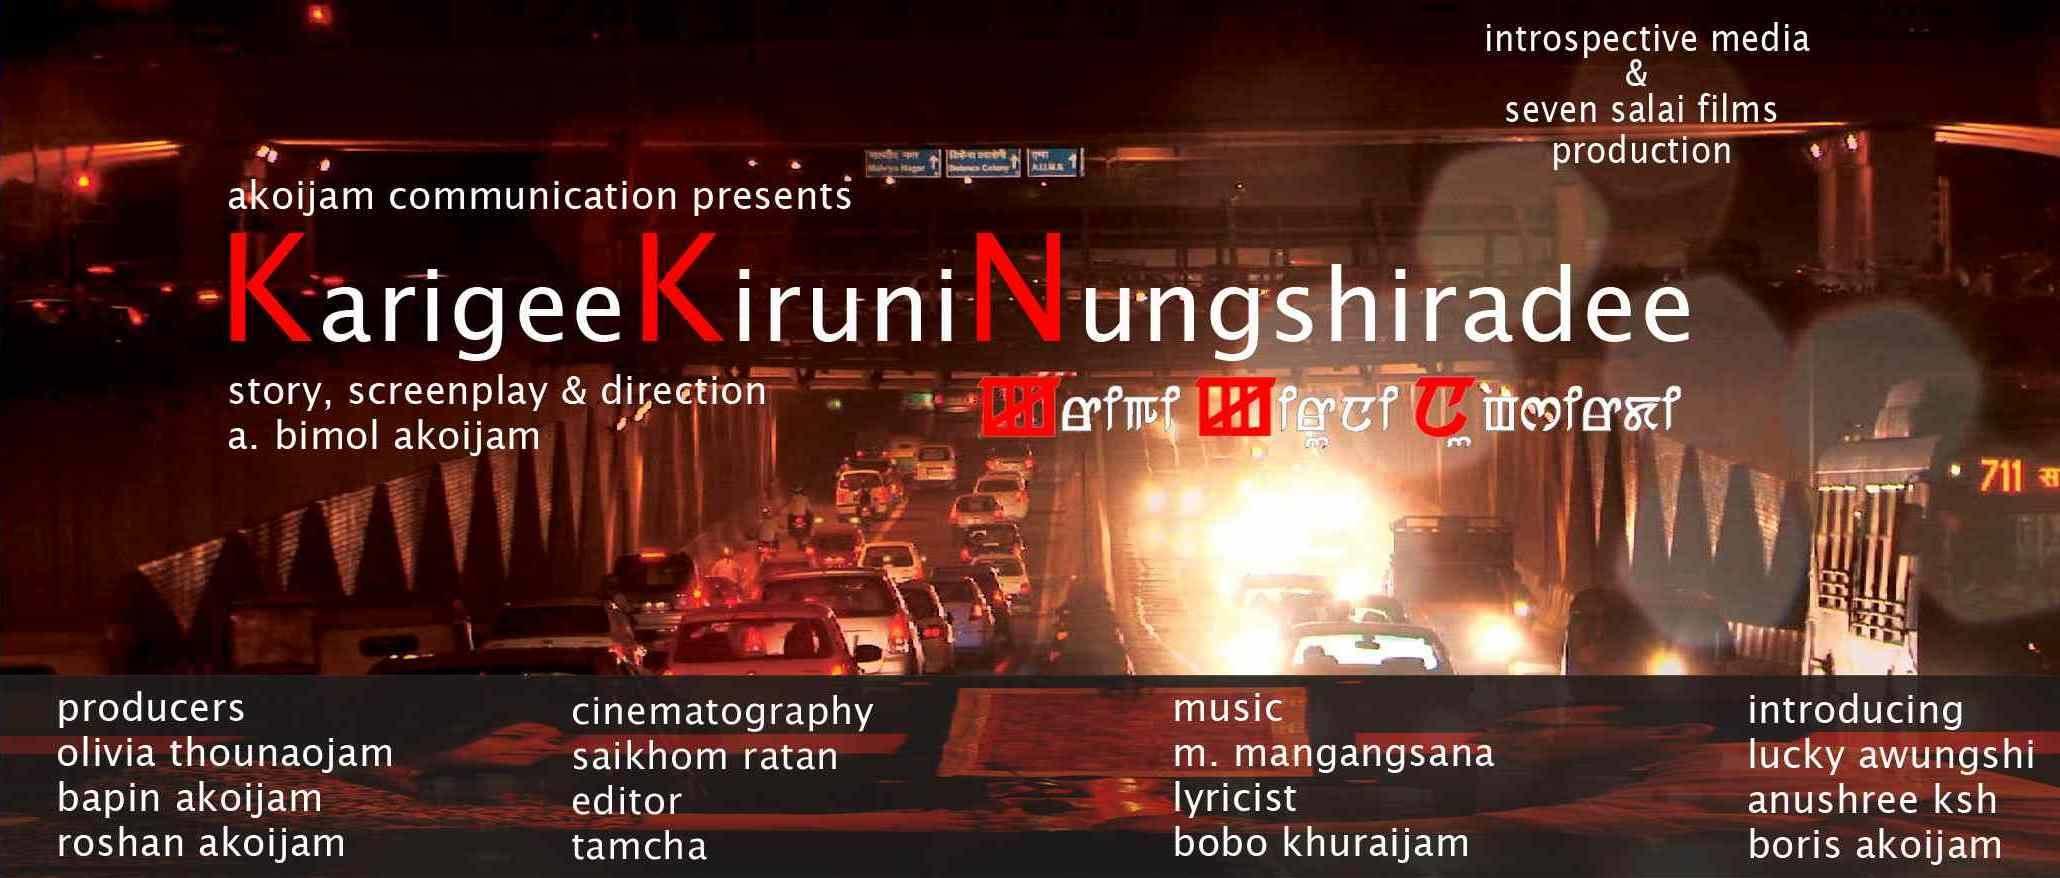 Karigee Kiruni Nungshiradee (2014)